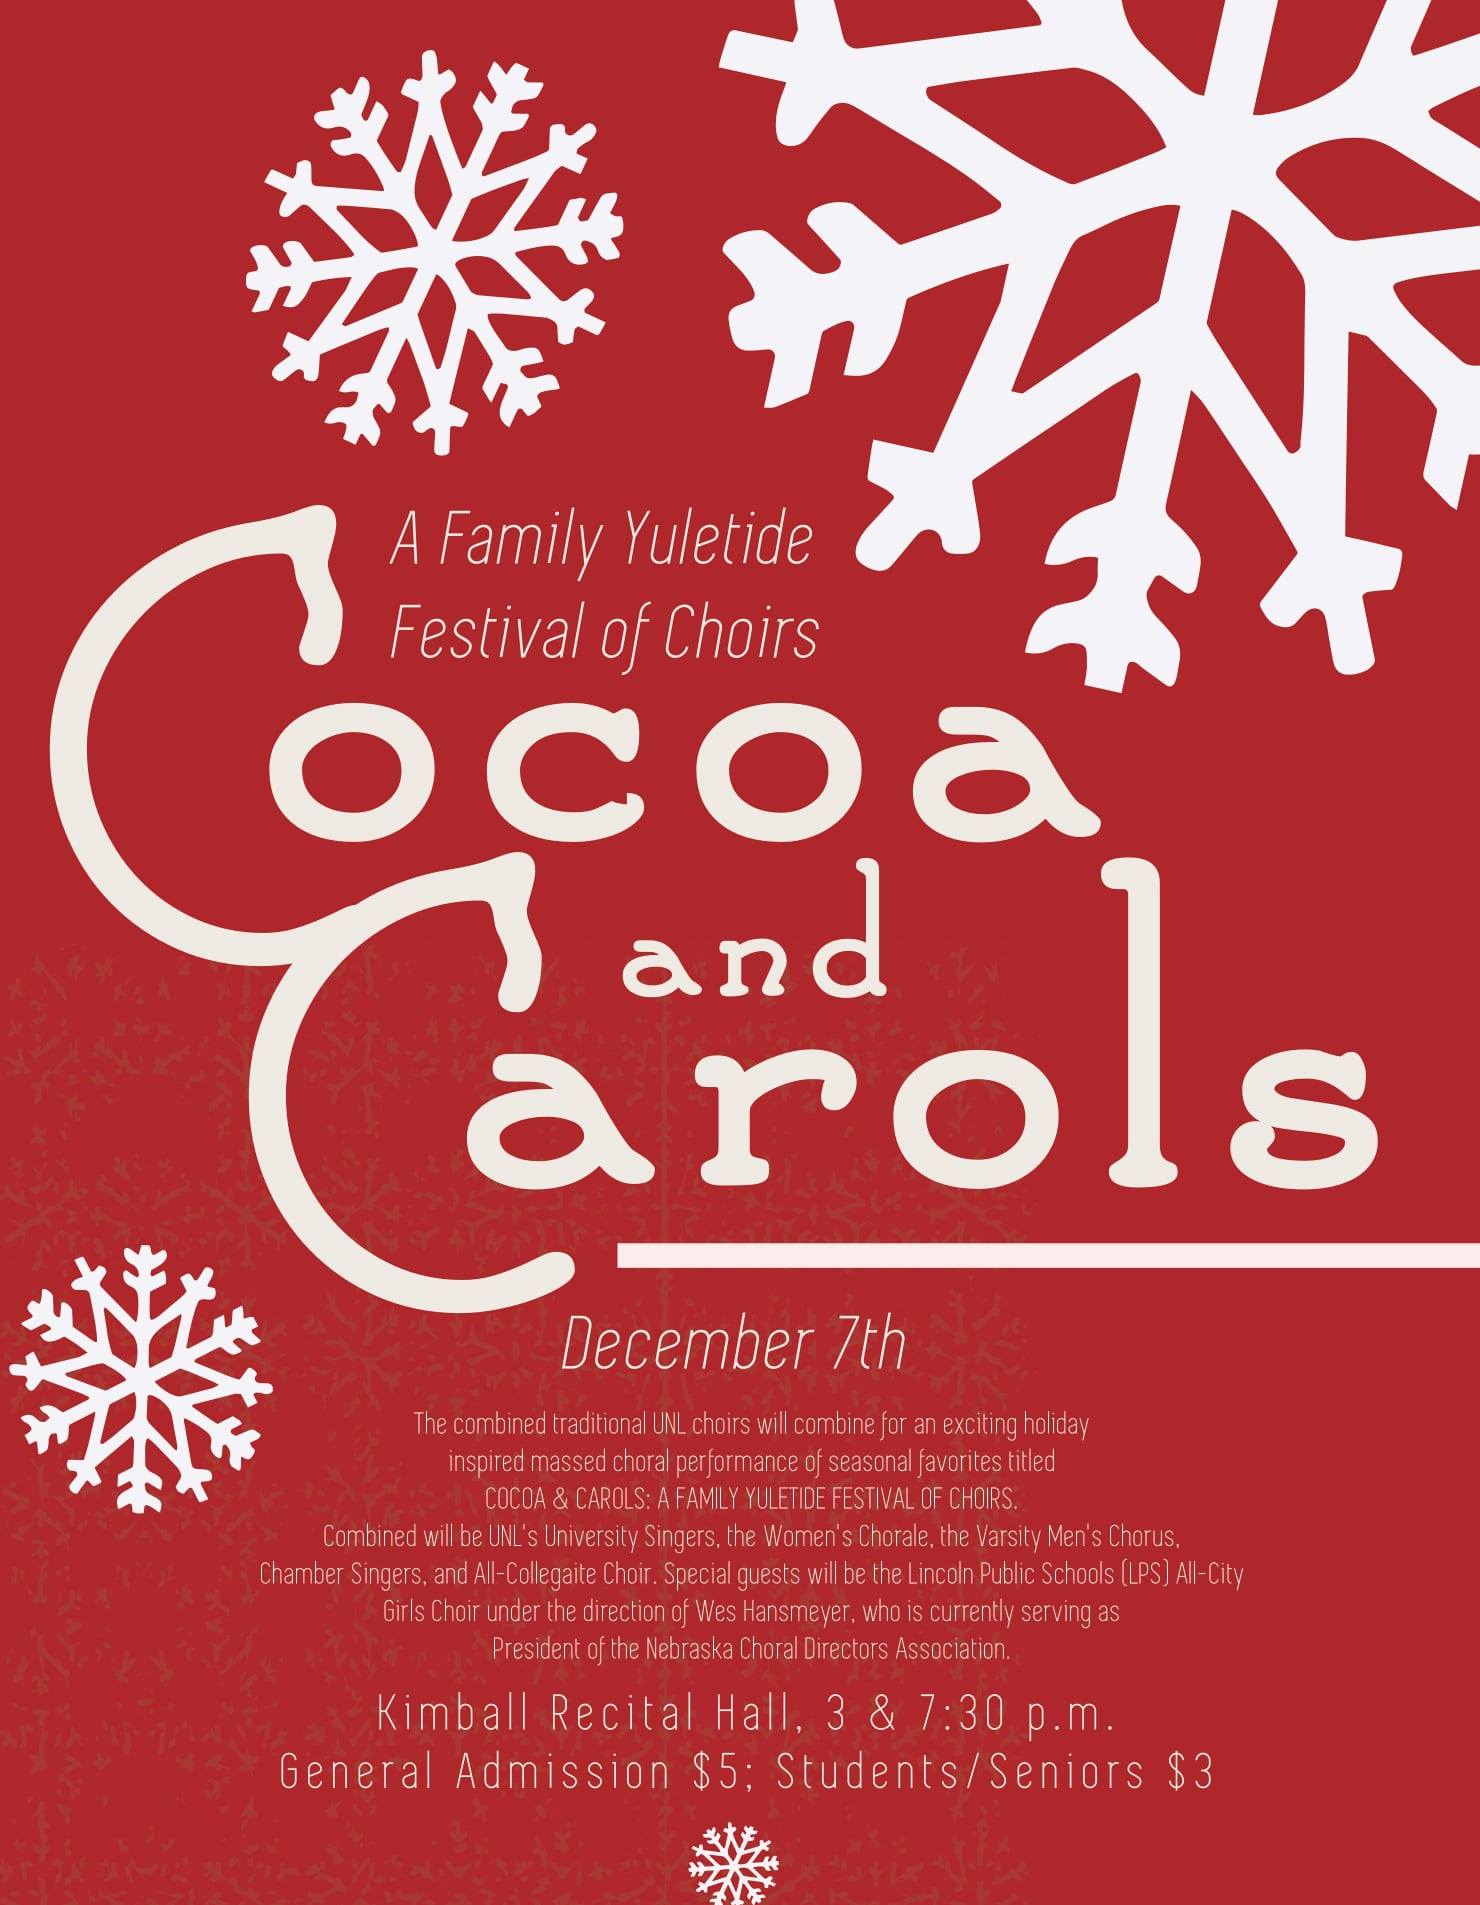 Cocoa and Carols